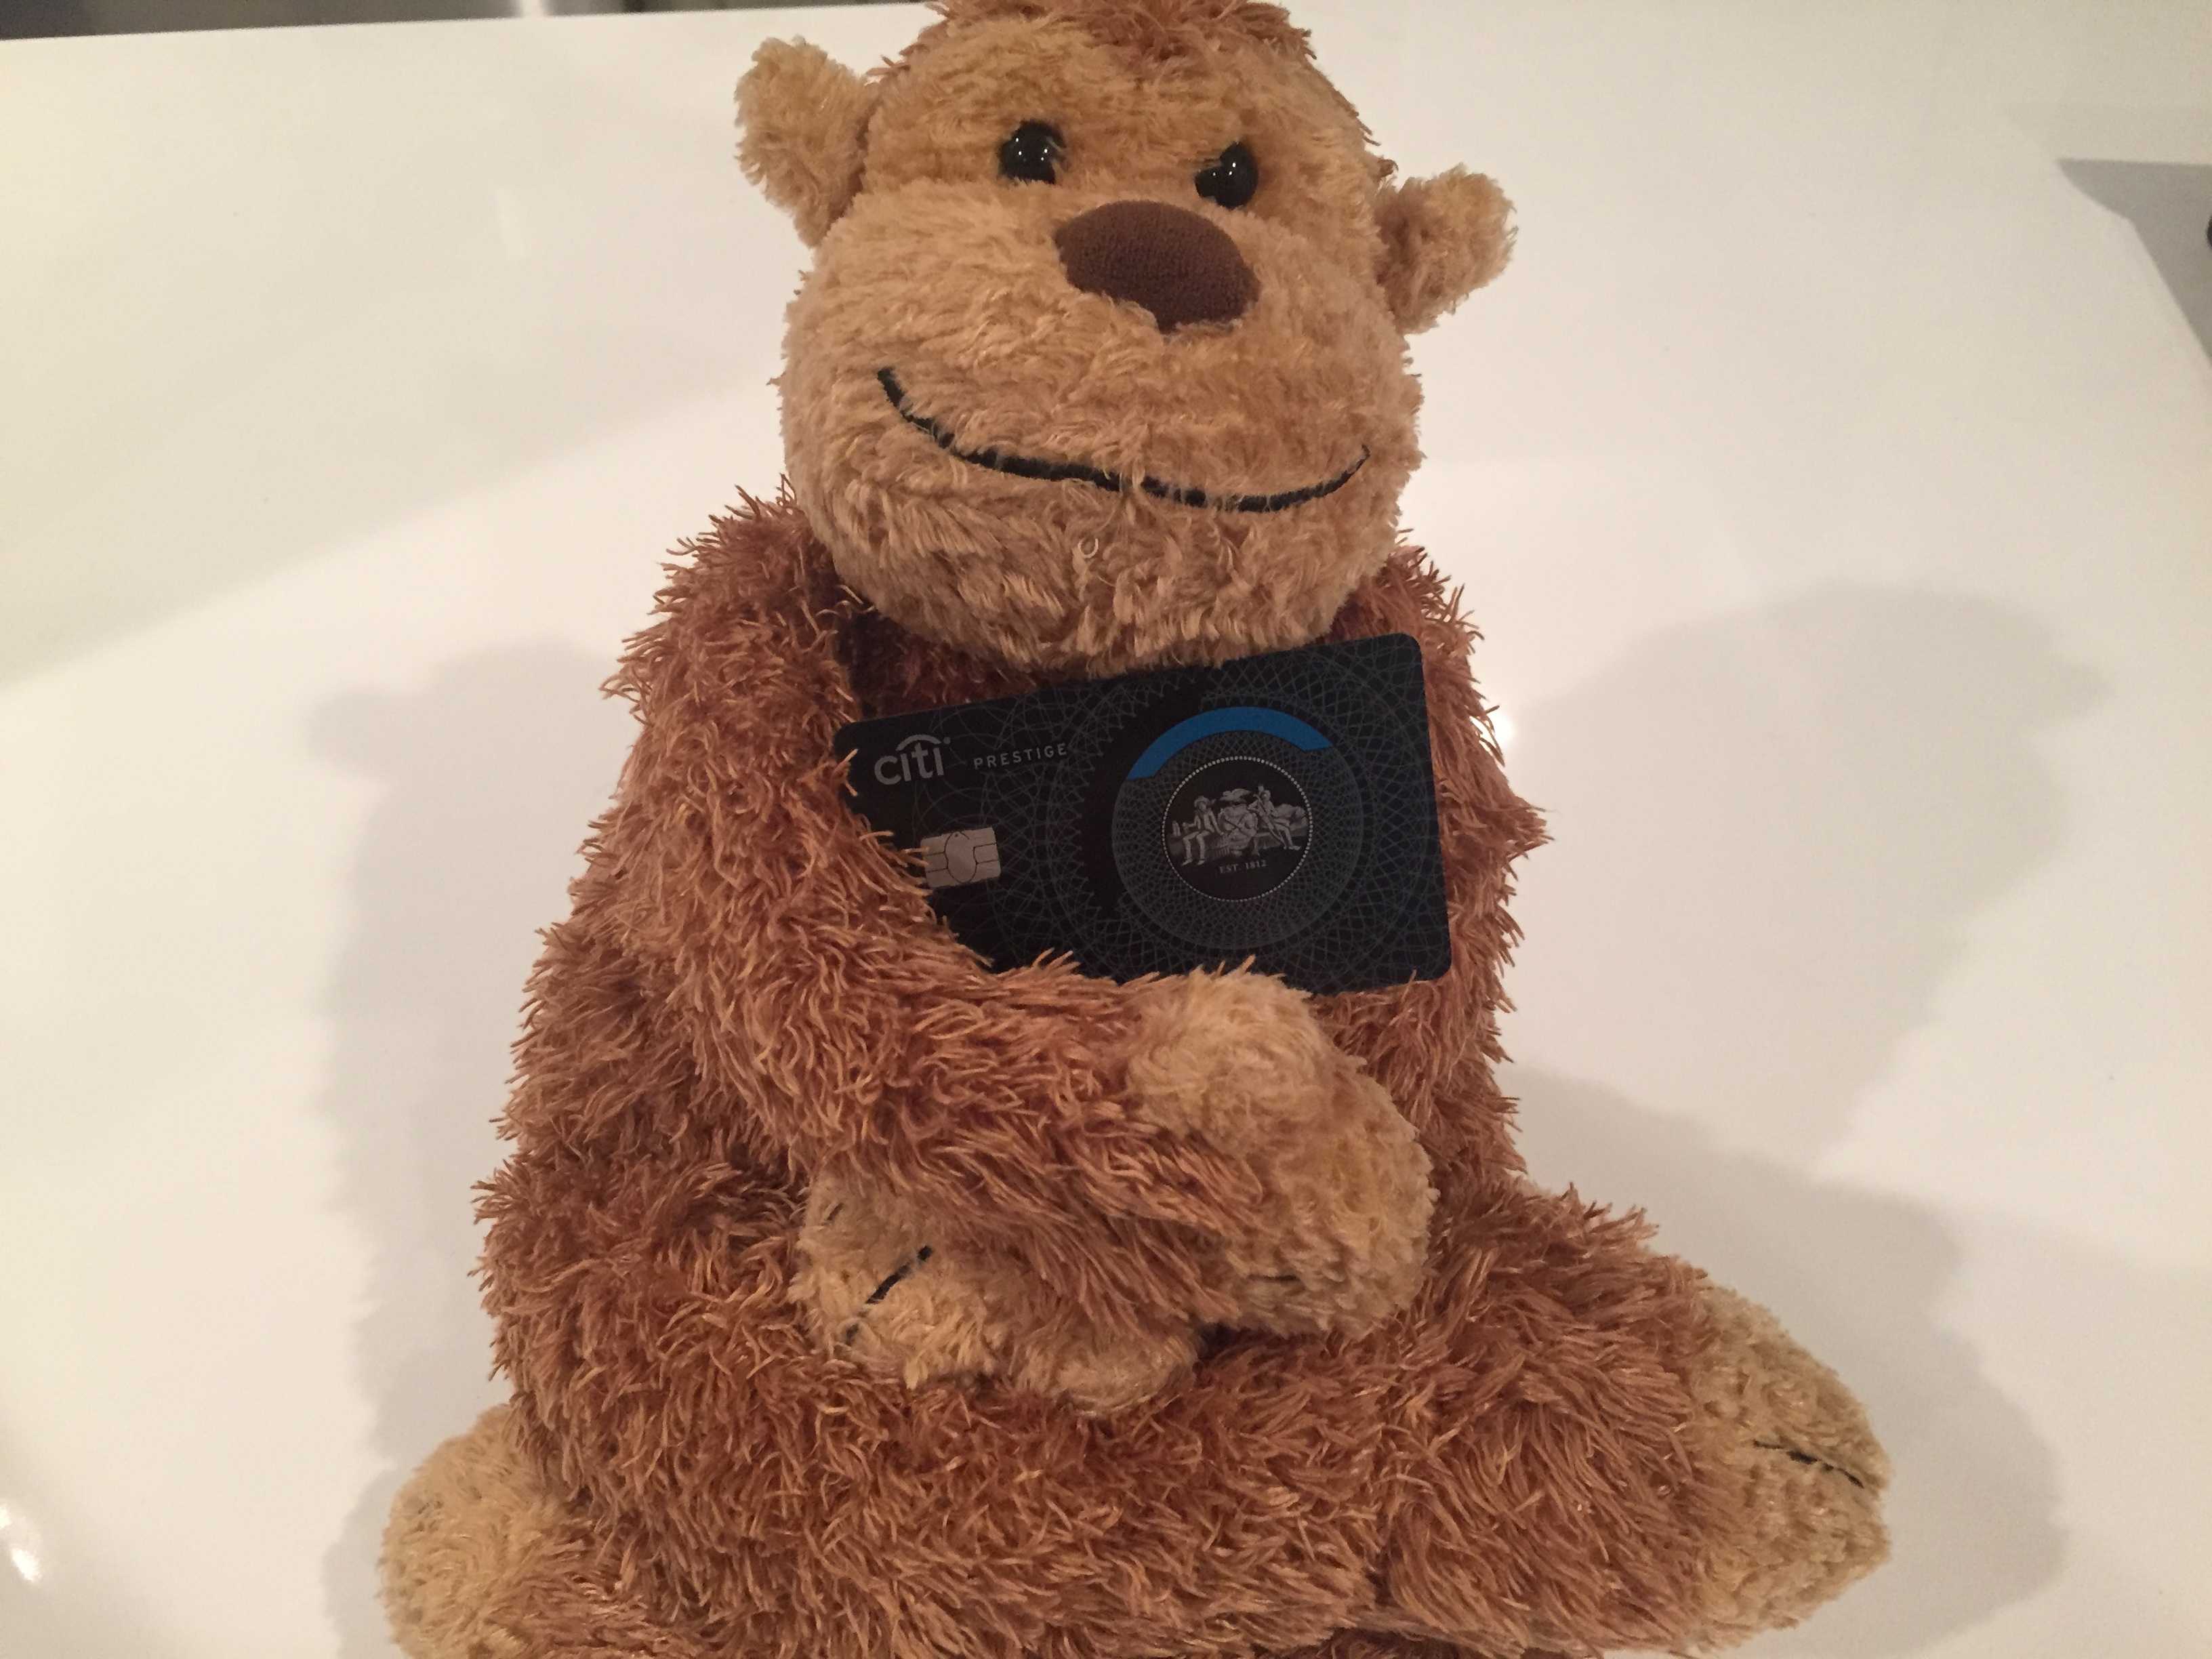 a stuffed animal holding a camera